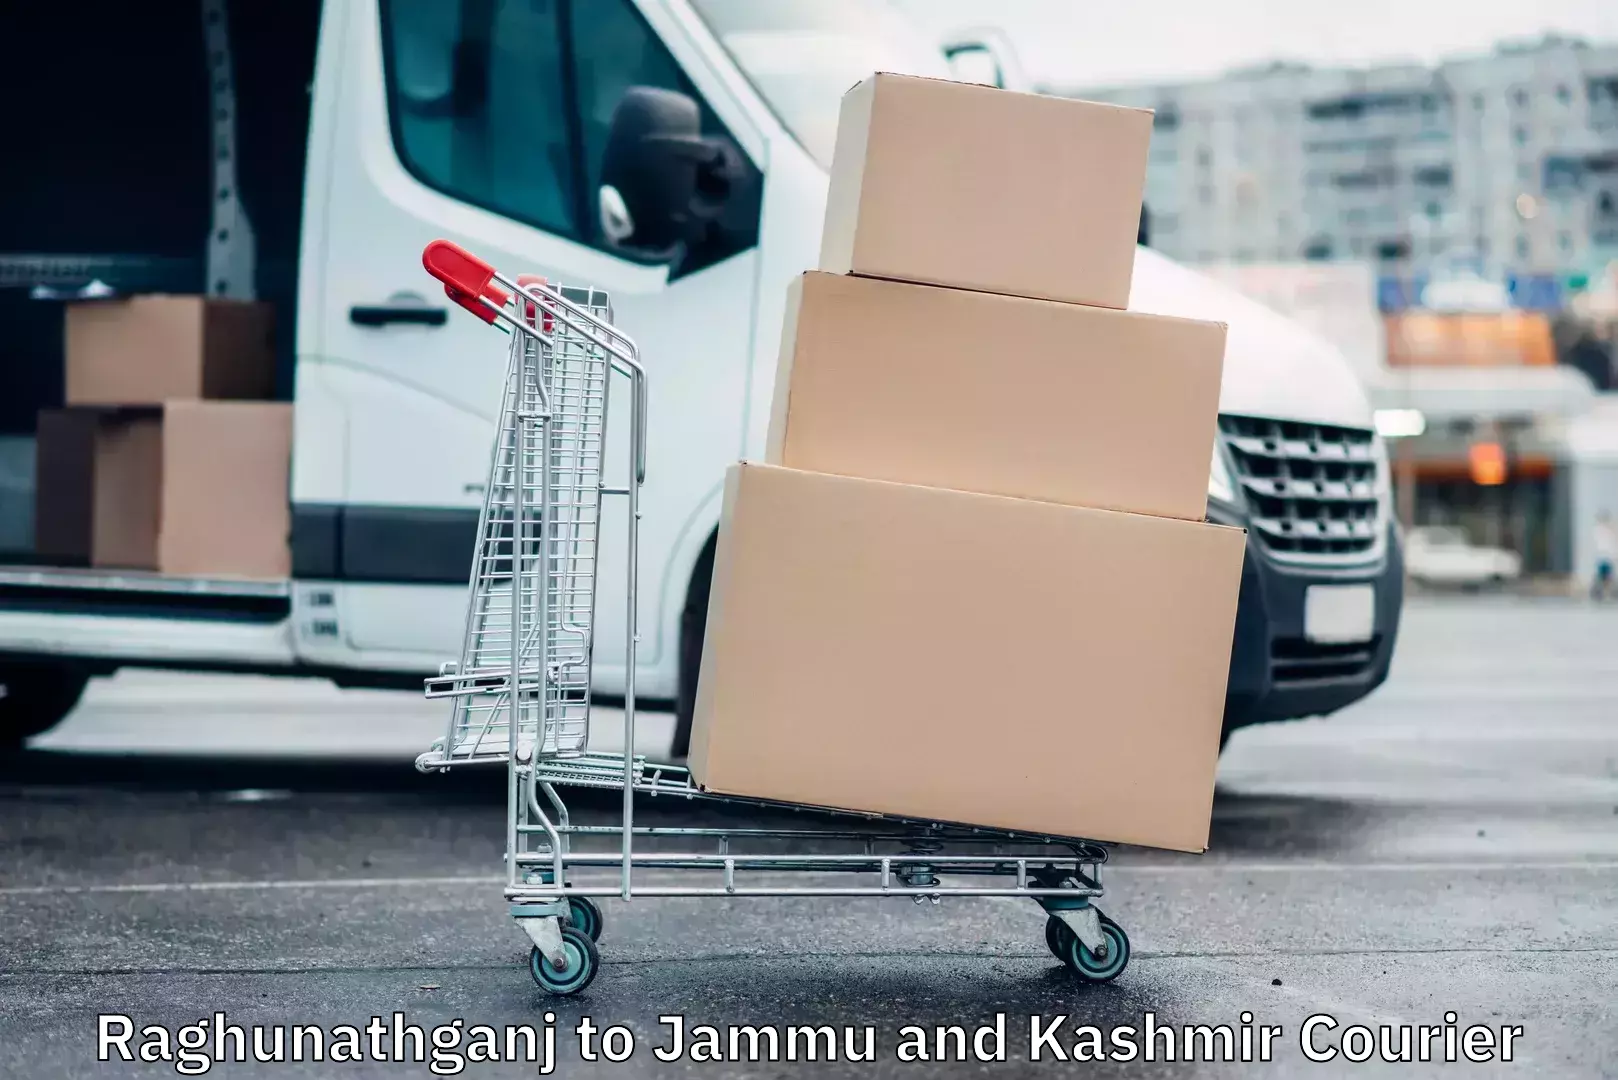 User-friendly courier app Raghunathganj to Jammu and Kashmir